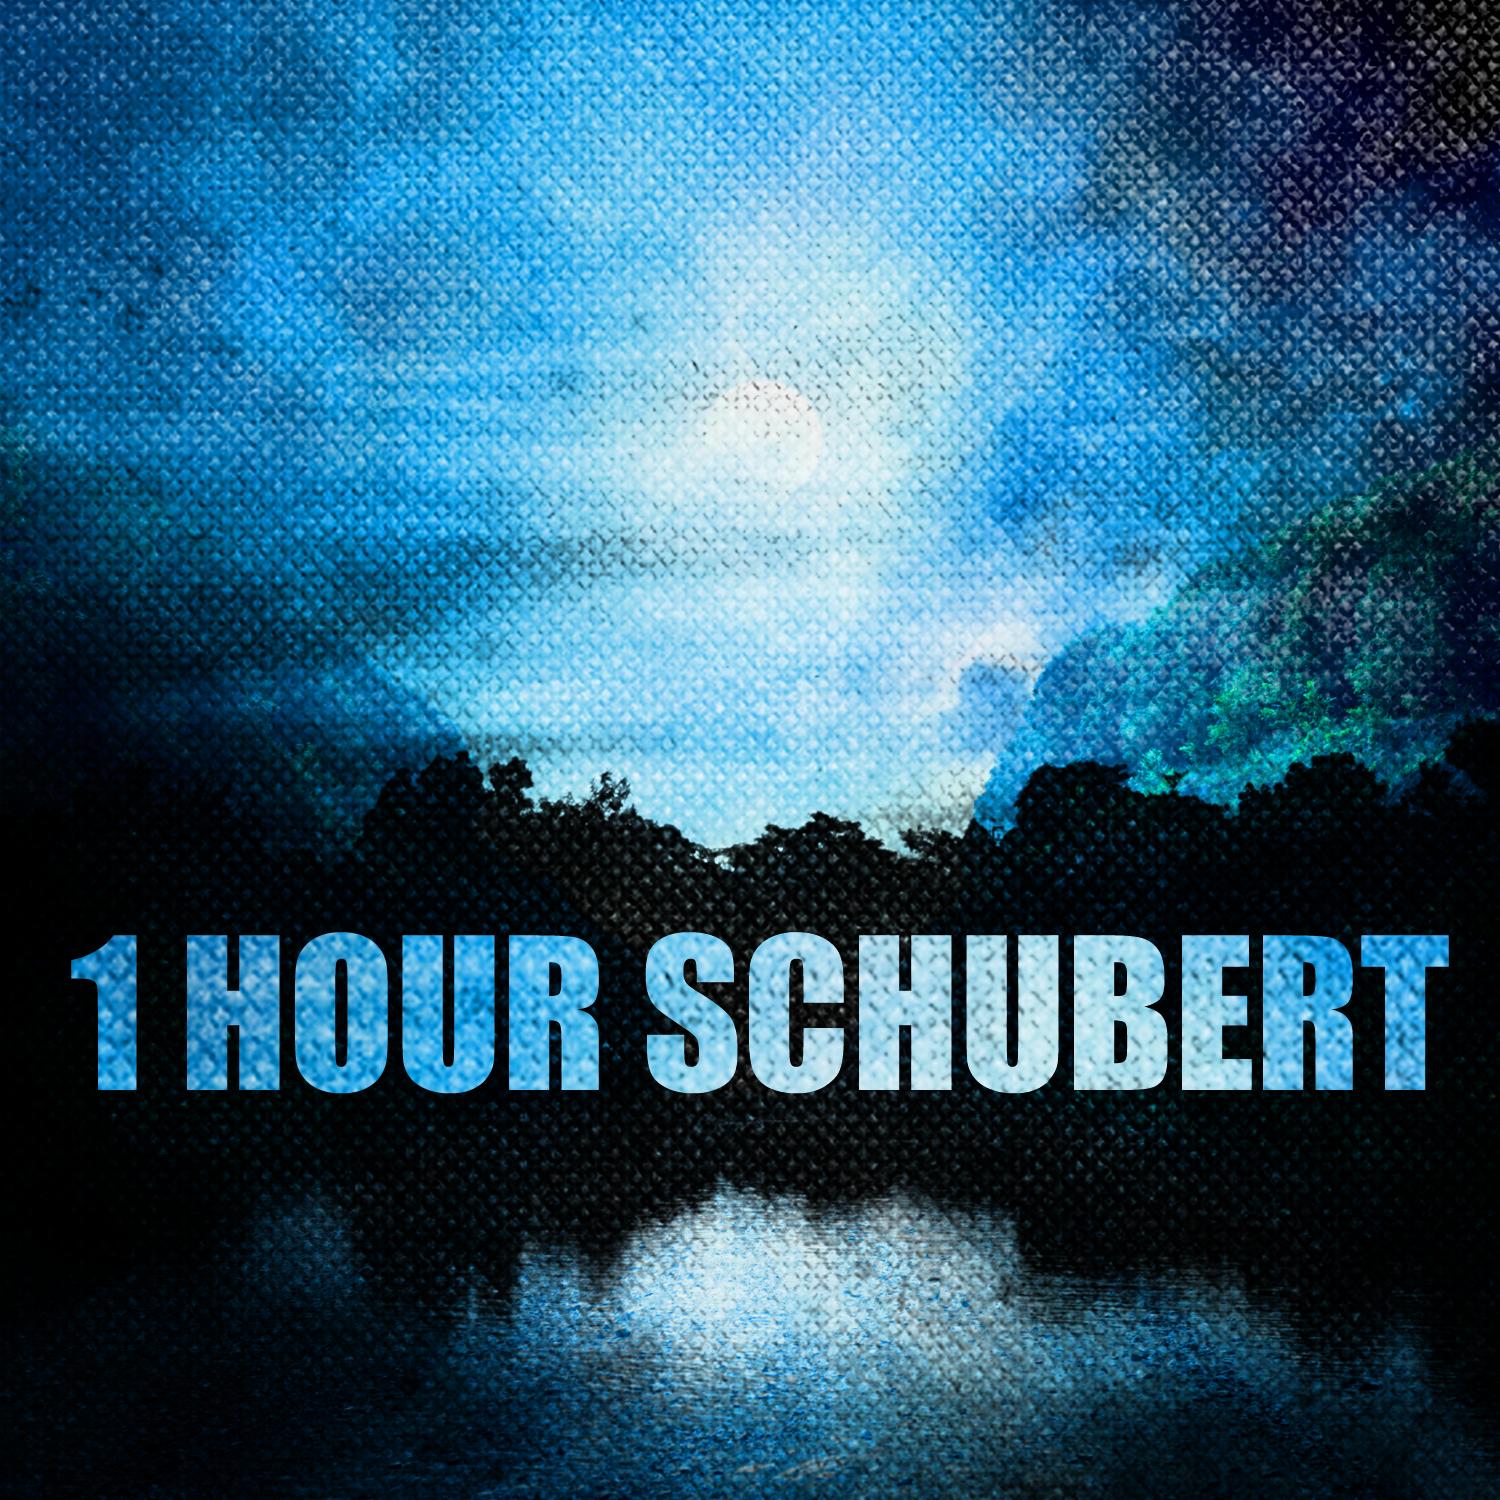 1 Hour Schubert